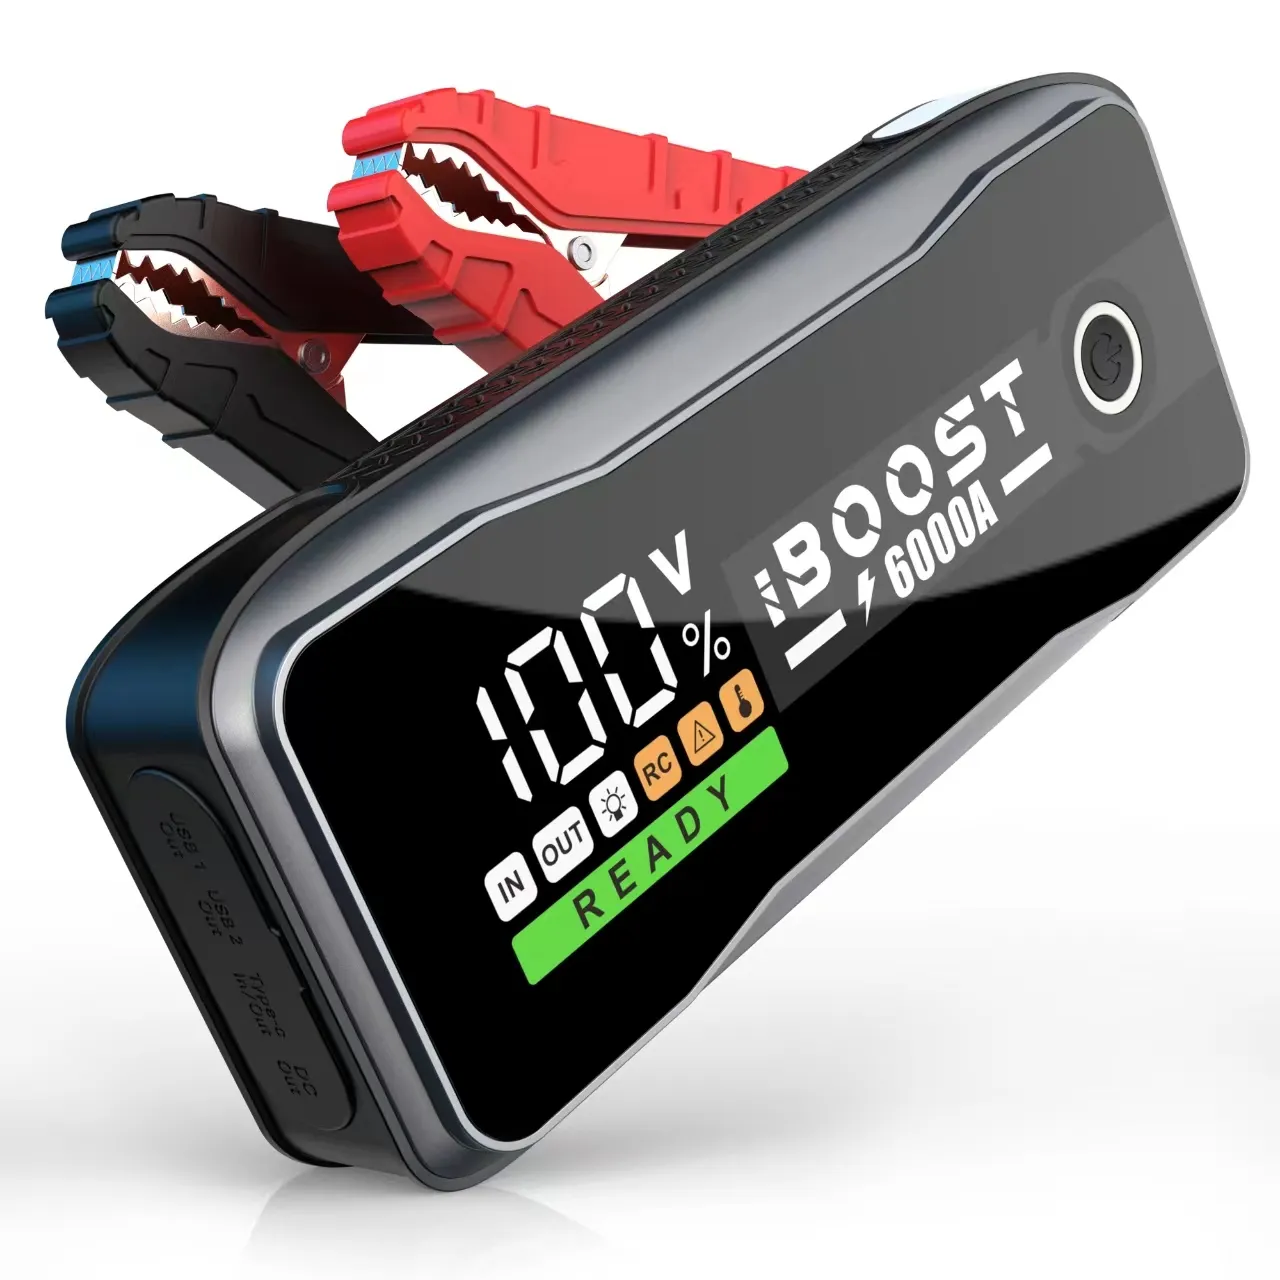 Tragbares Ladegerät Start leistung Notfall Auto Start Booster 12V Auto Starthilfe Power Bank Mit Smart Jumper Kabel